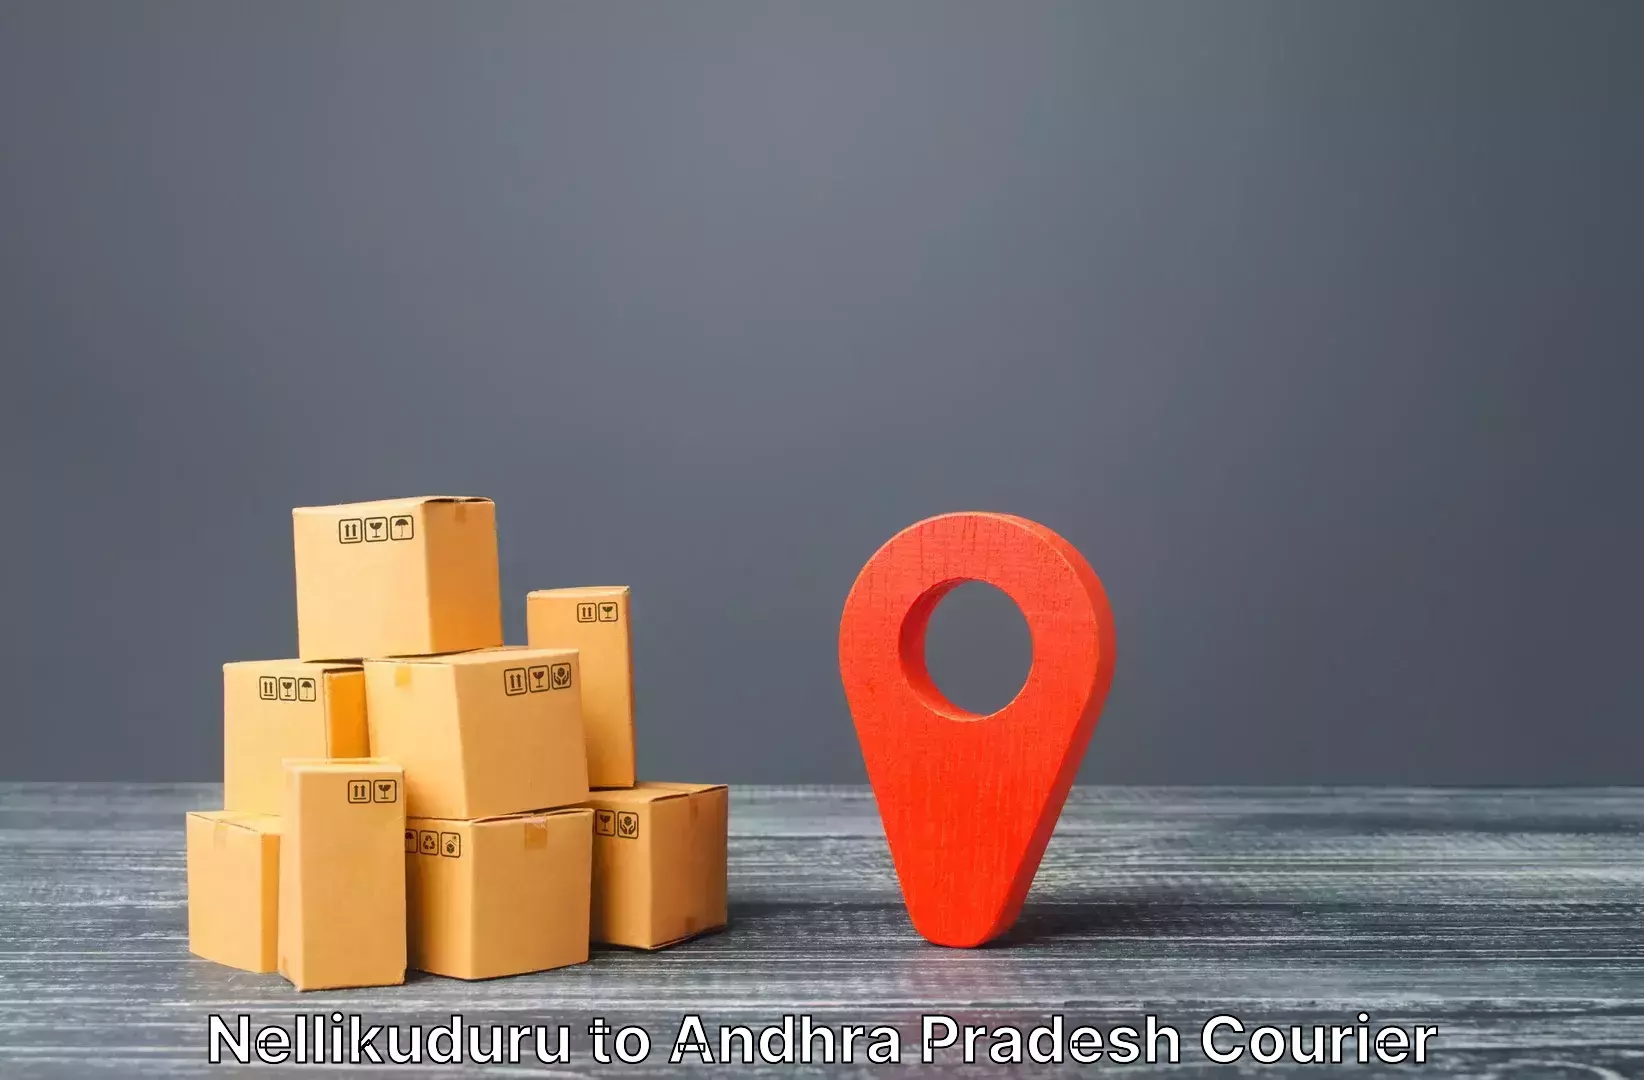 Luggage delivery providers Nellikuduru to Draksharamam